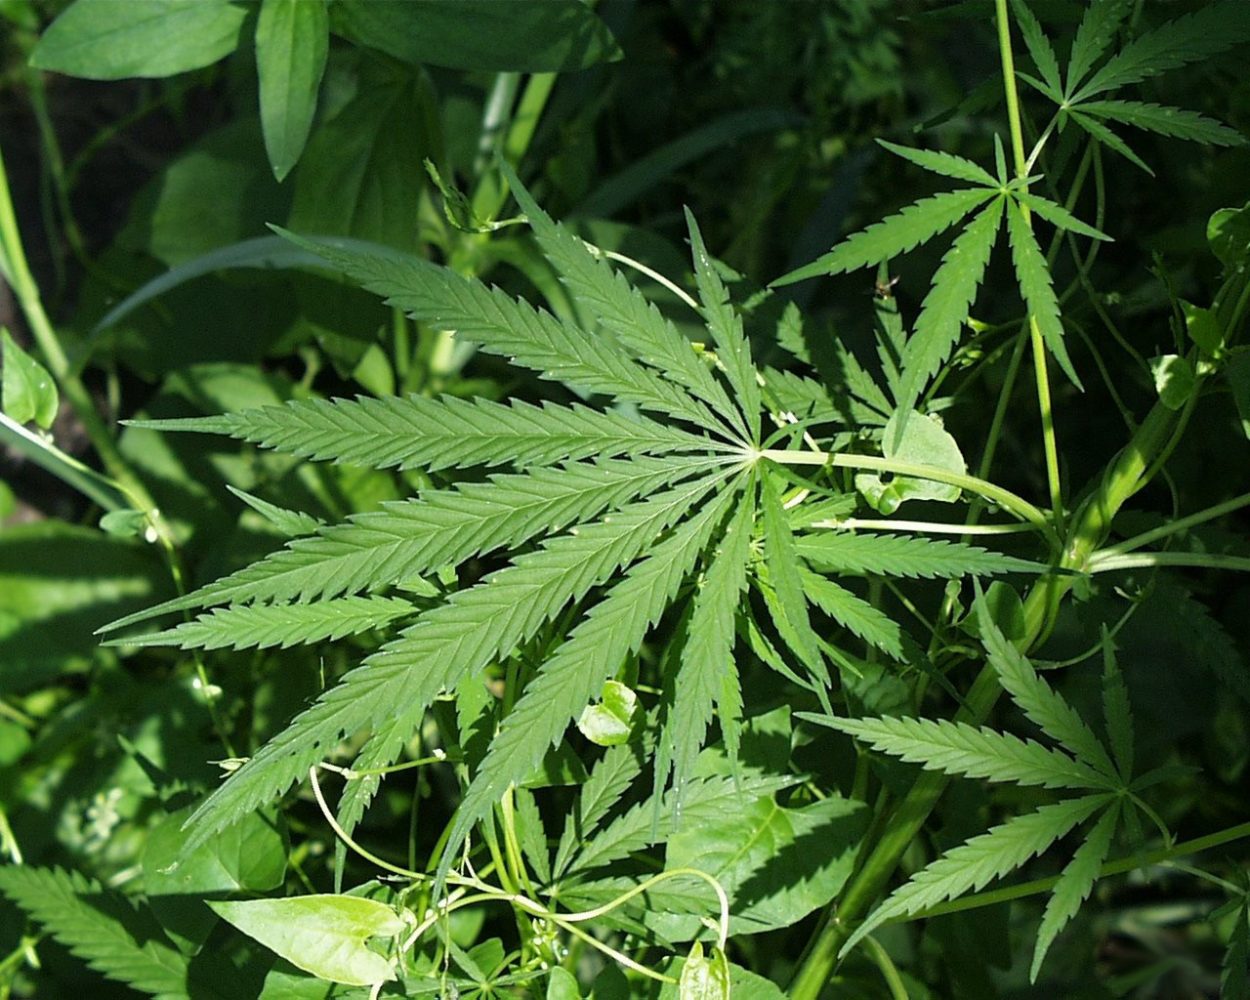 Sitka’s first marijuana law makes it onto the books